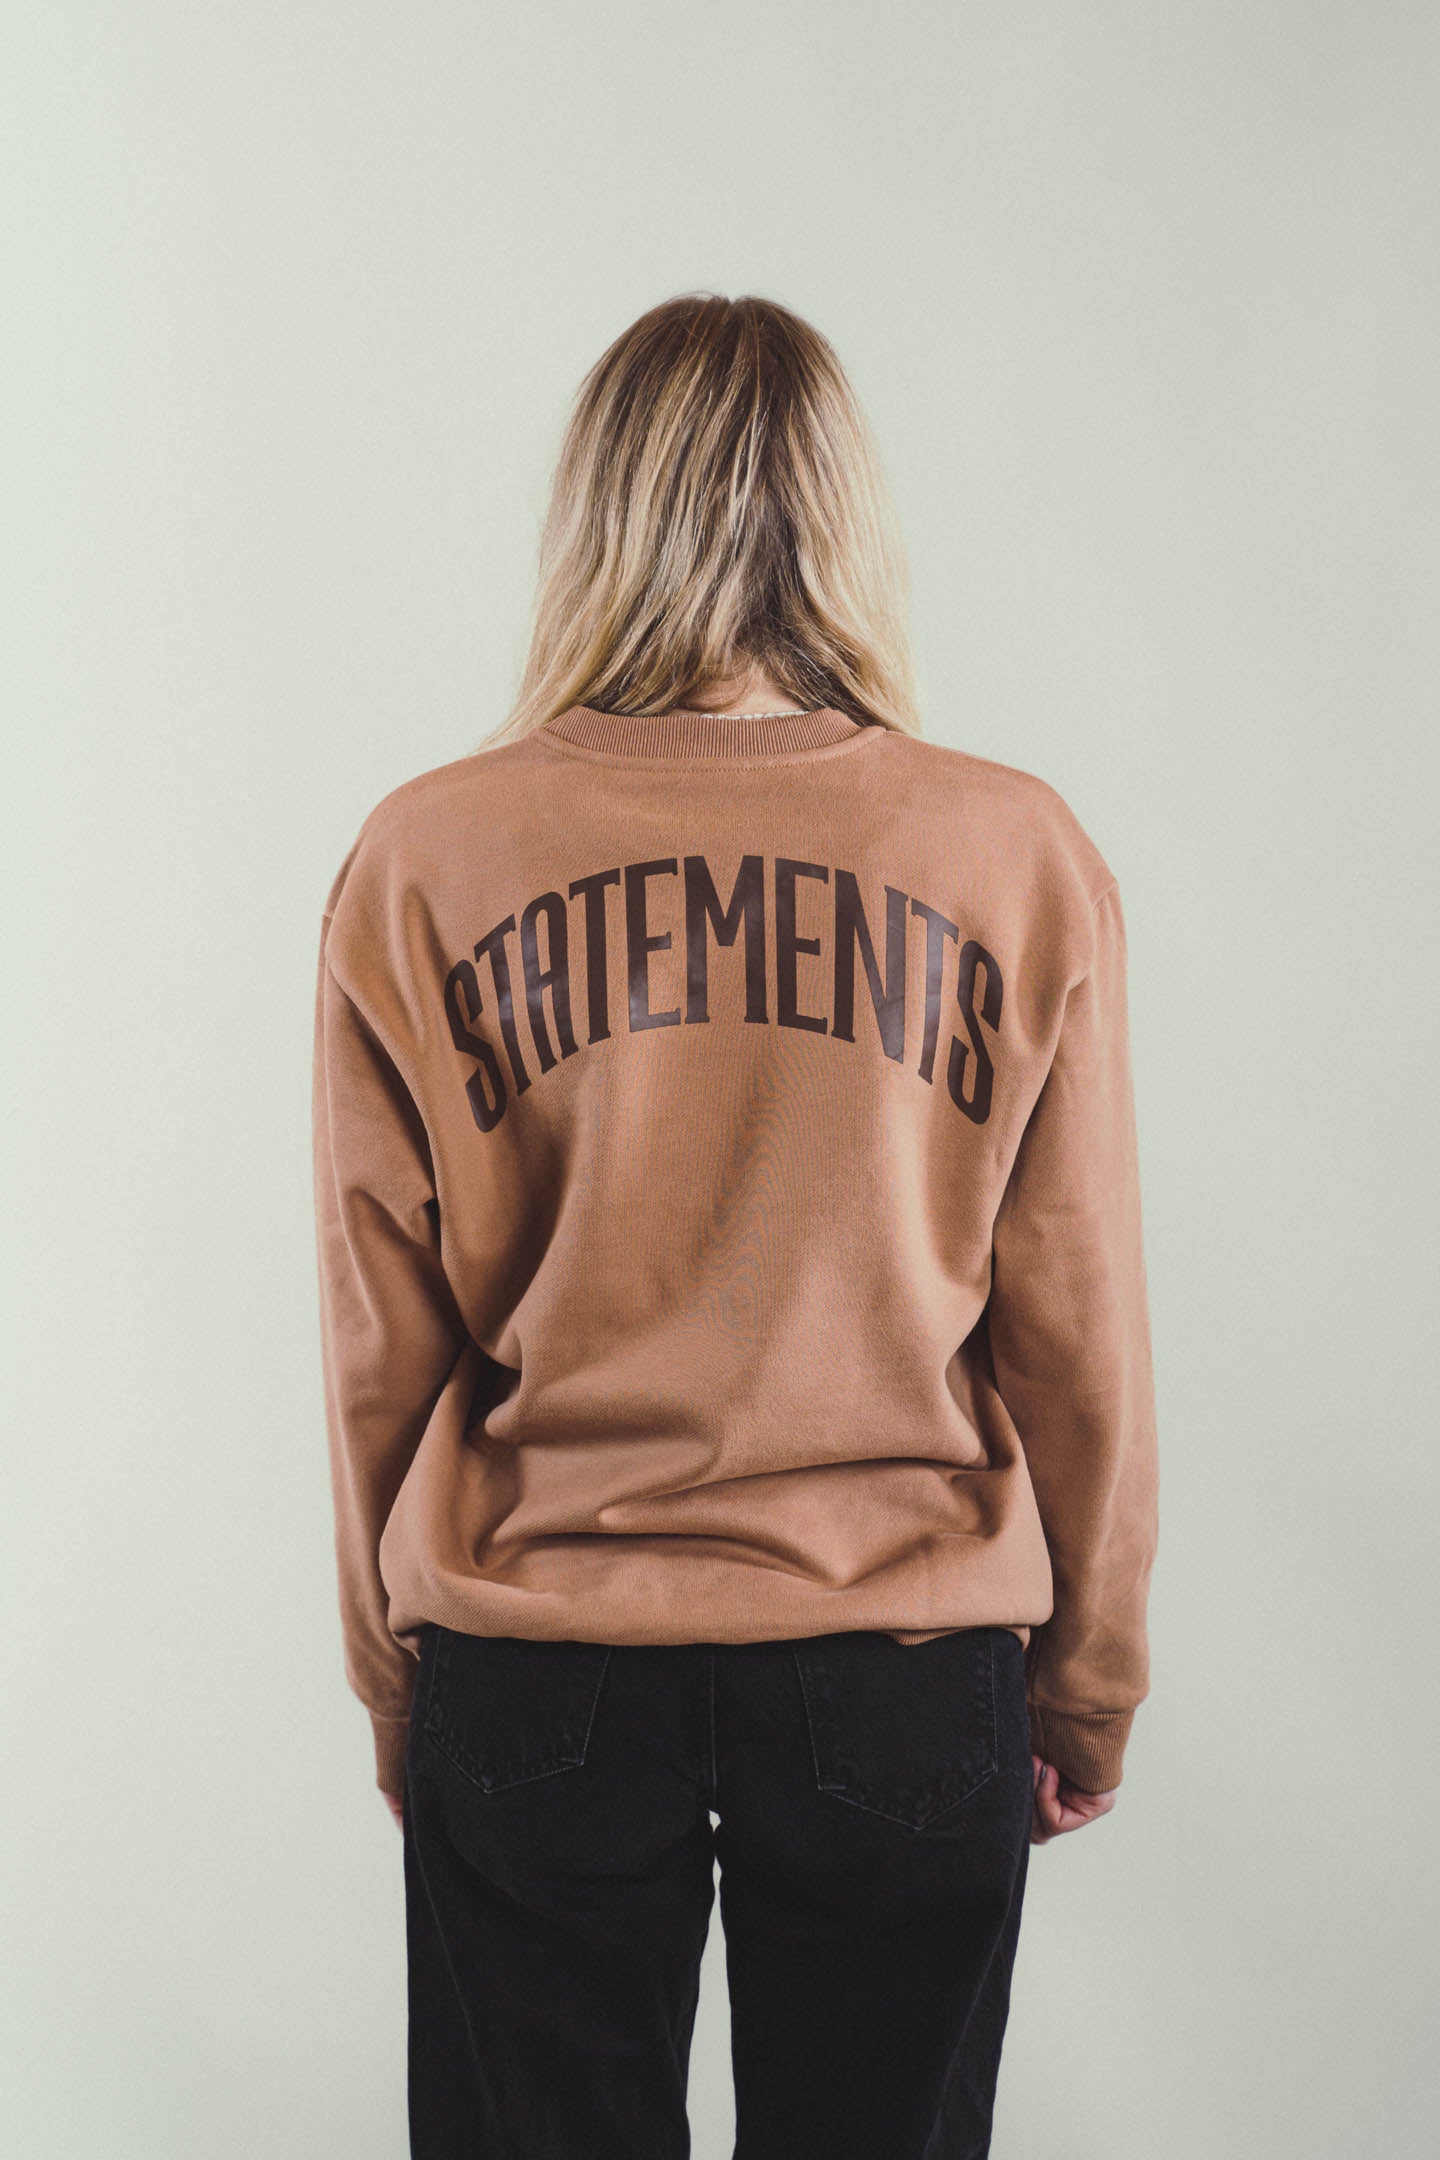 Sweater "Statement" brown